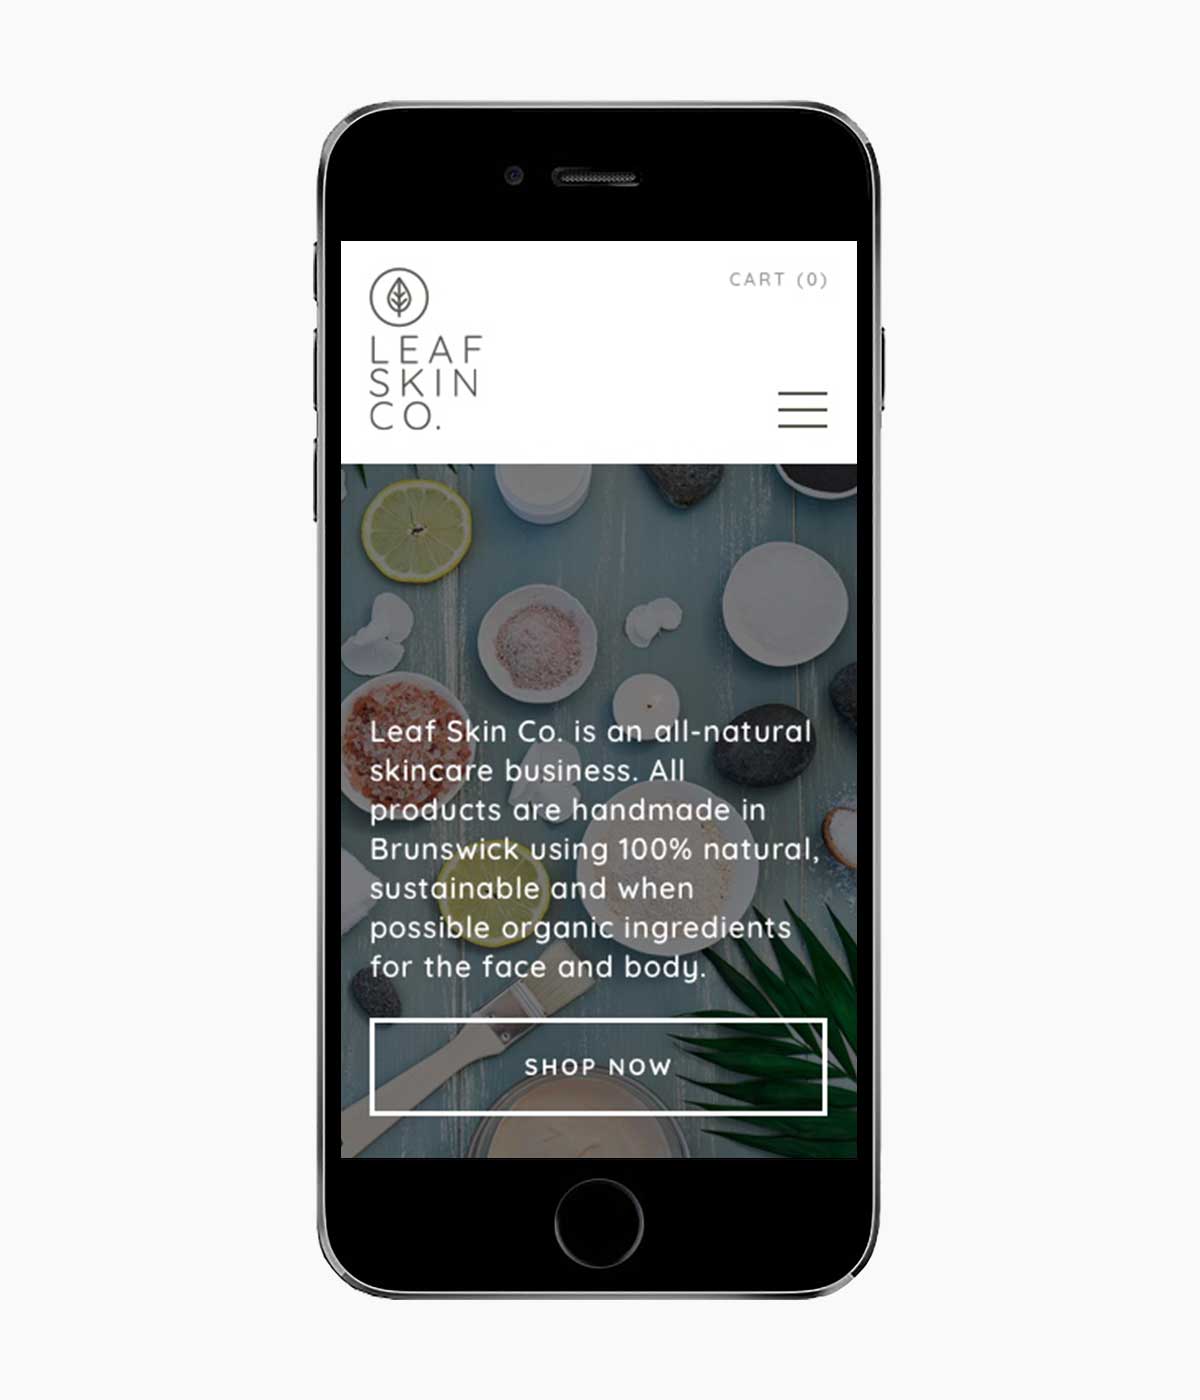 Leaf Skin responsive website on iPhone in portrait view